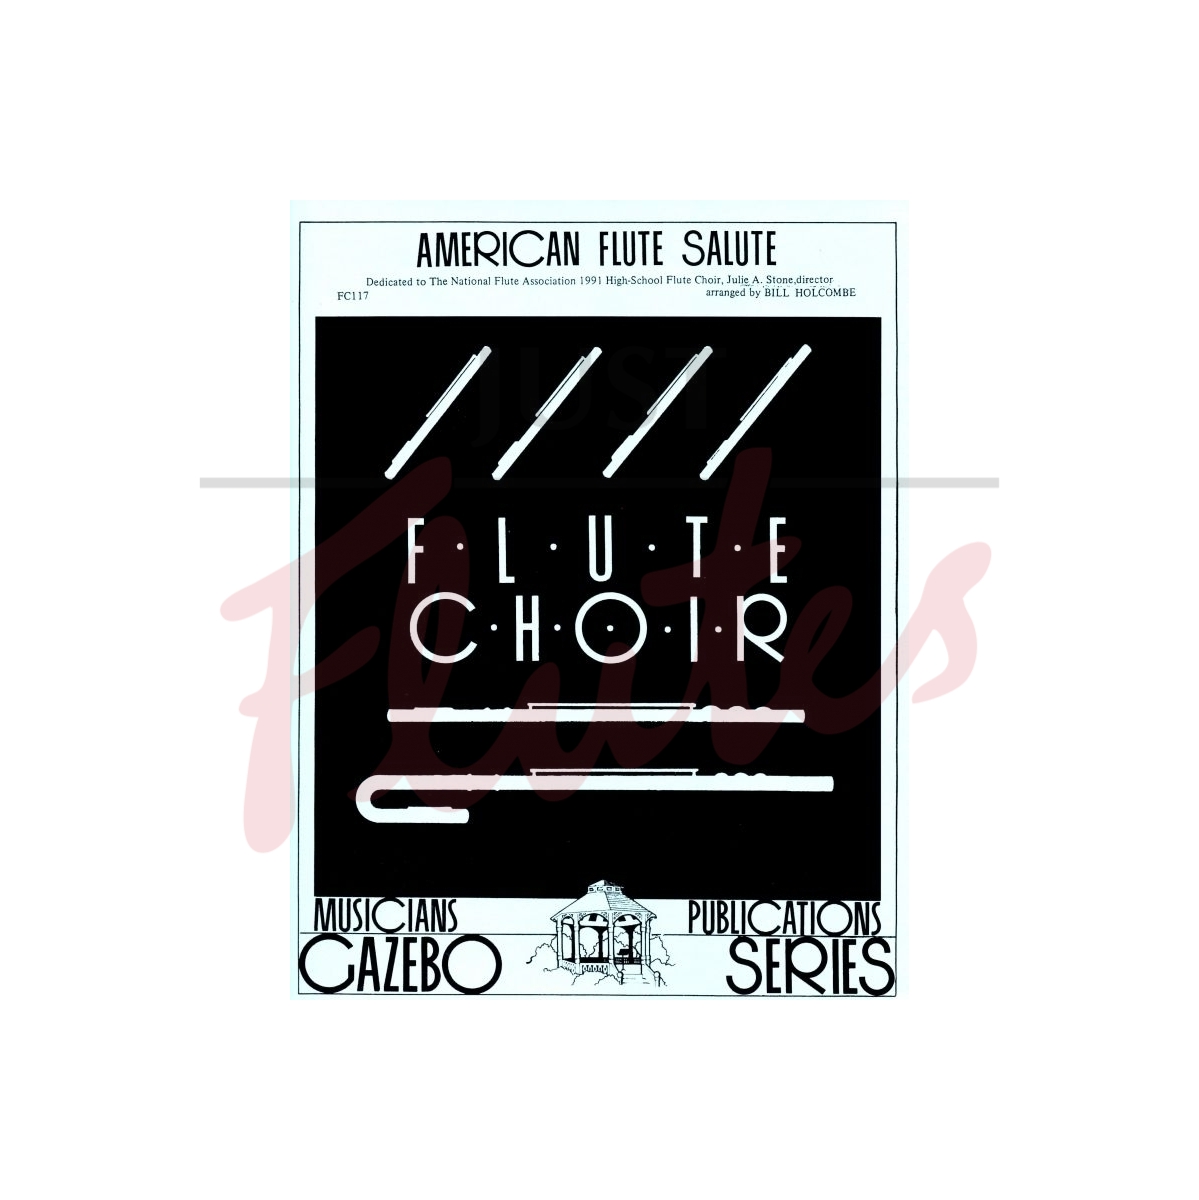 American Flute Salute [Flute Choir]